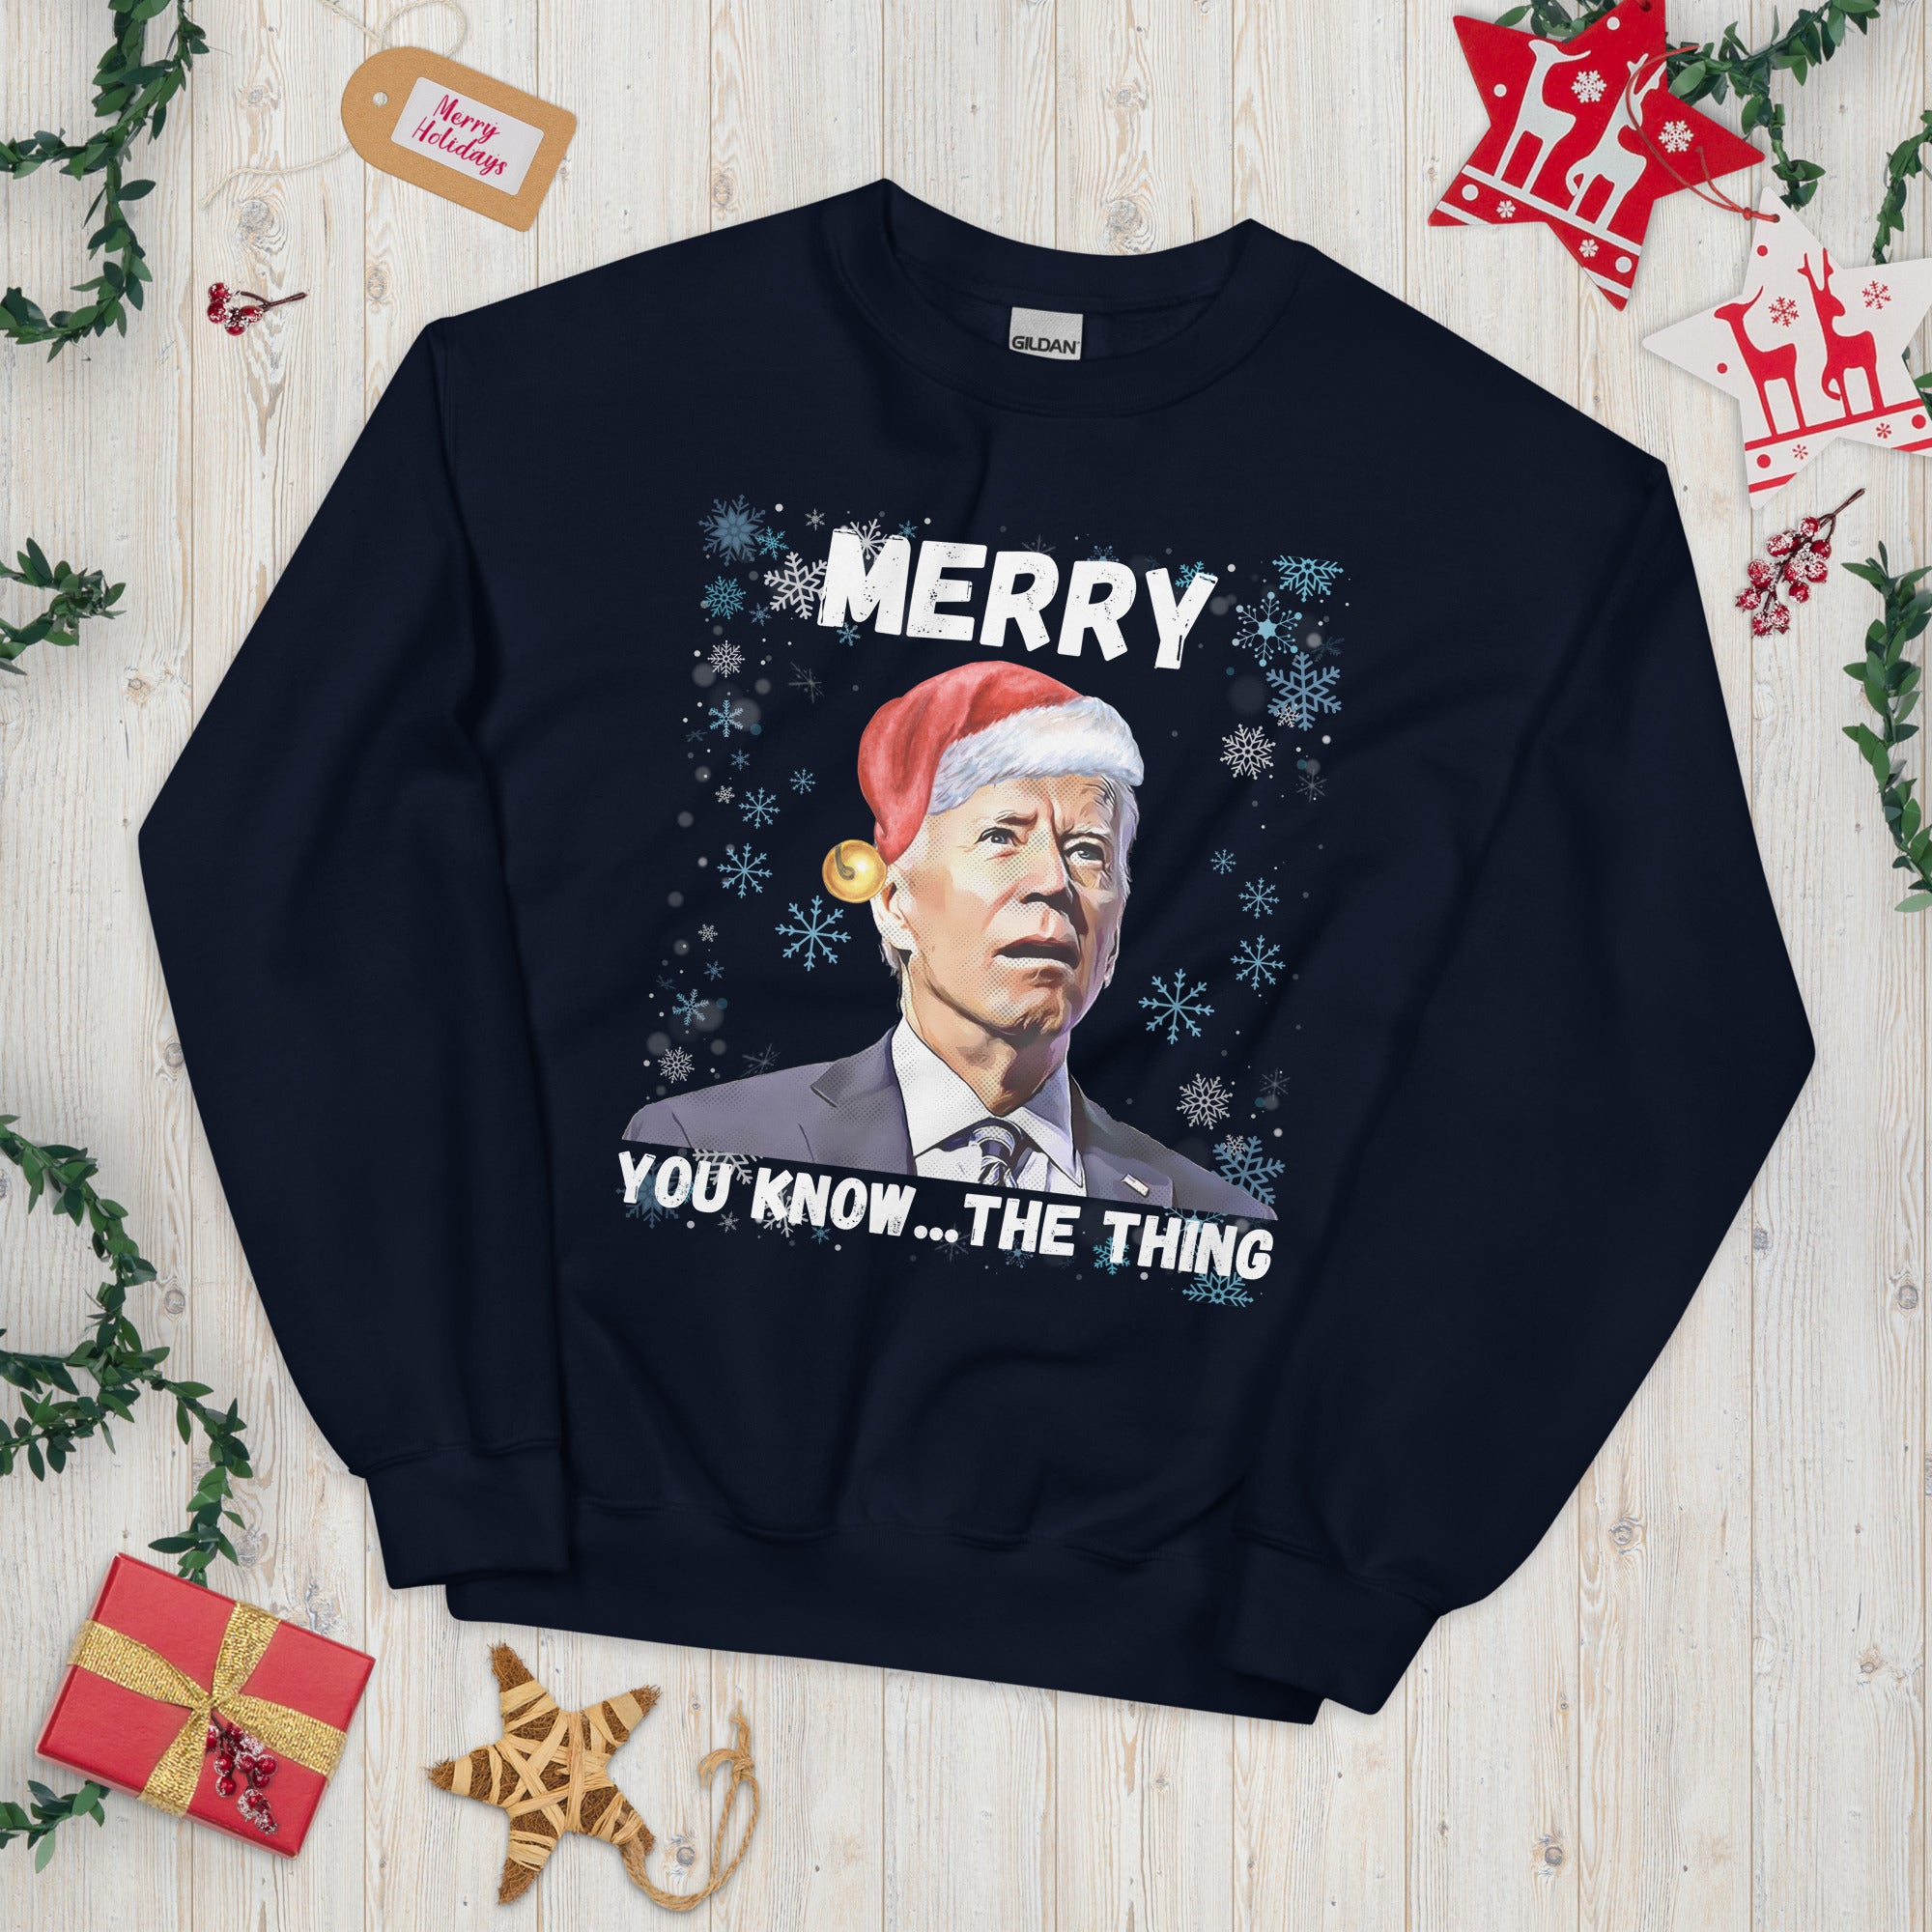 Merry You Know The Thing, Christmas Biden Sweatshirt, Funny Confused Biden Xmas Shirt, Santa Joe Biden Sweater Republican Gift, FJB Crewneck - Madeinsea©